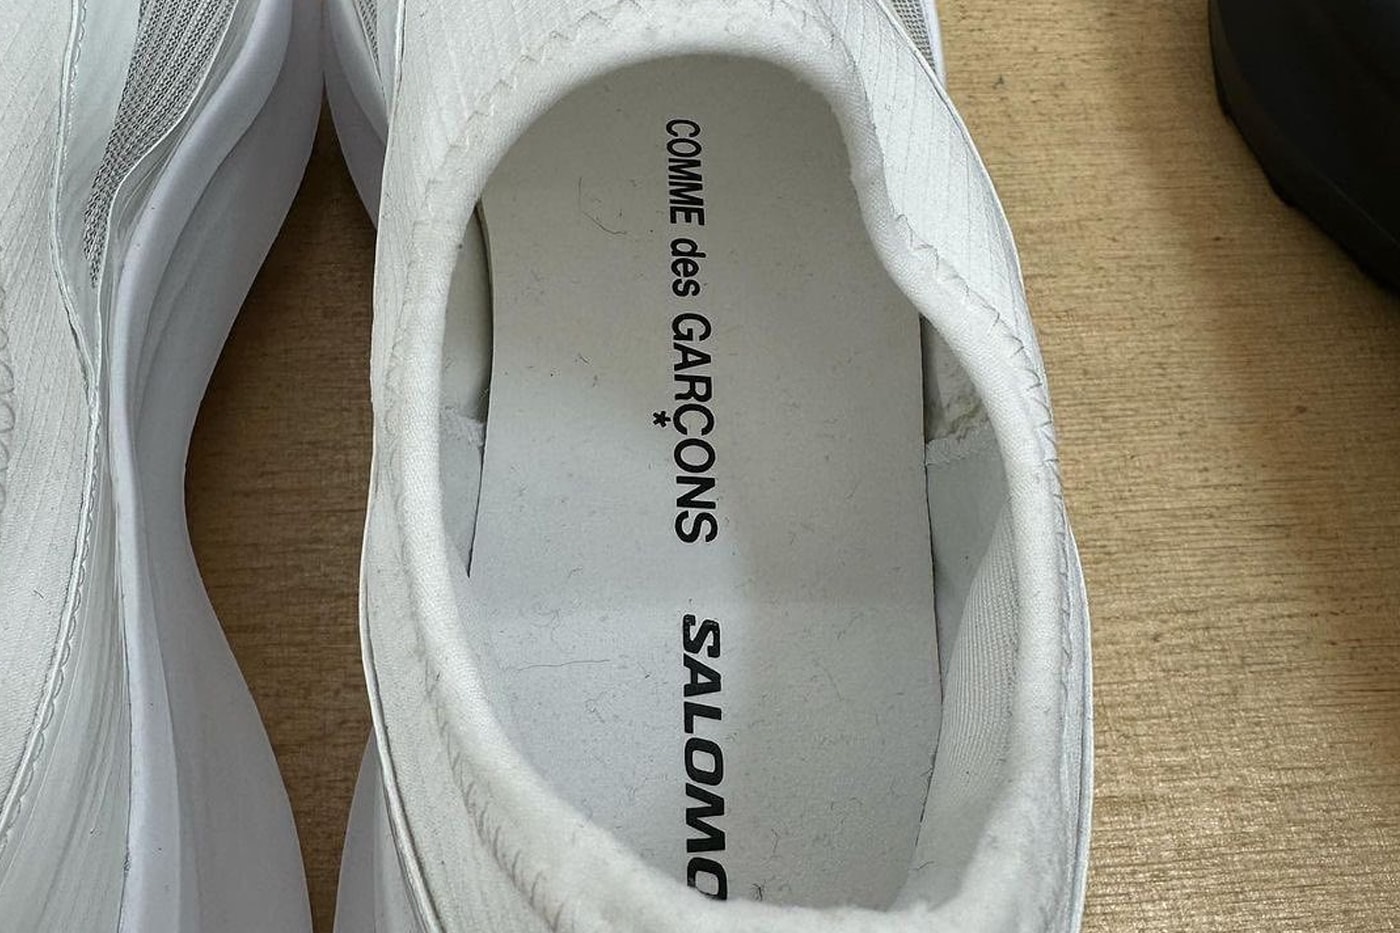 COMME des GARÇONS Salomon FW23 footwear sneakers white black laceless release info date price